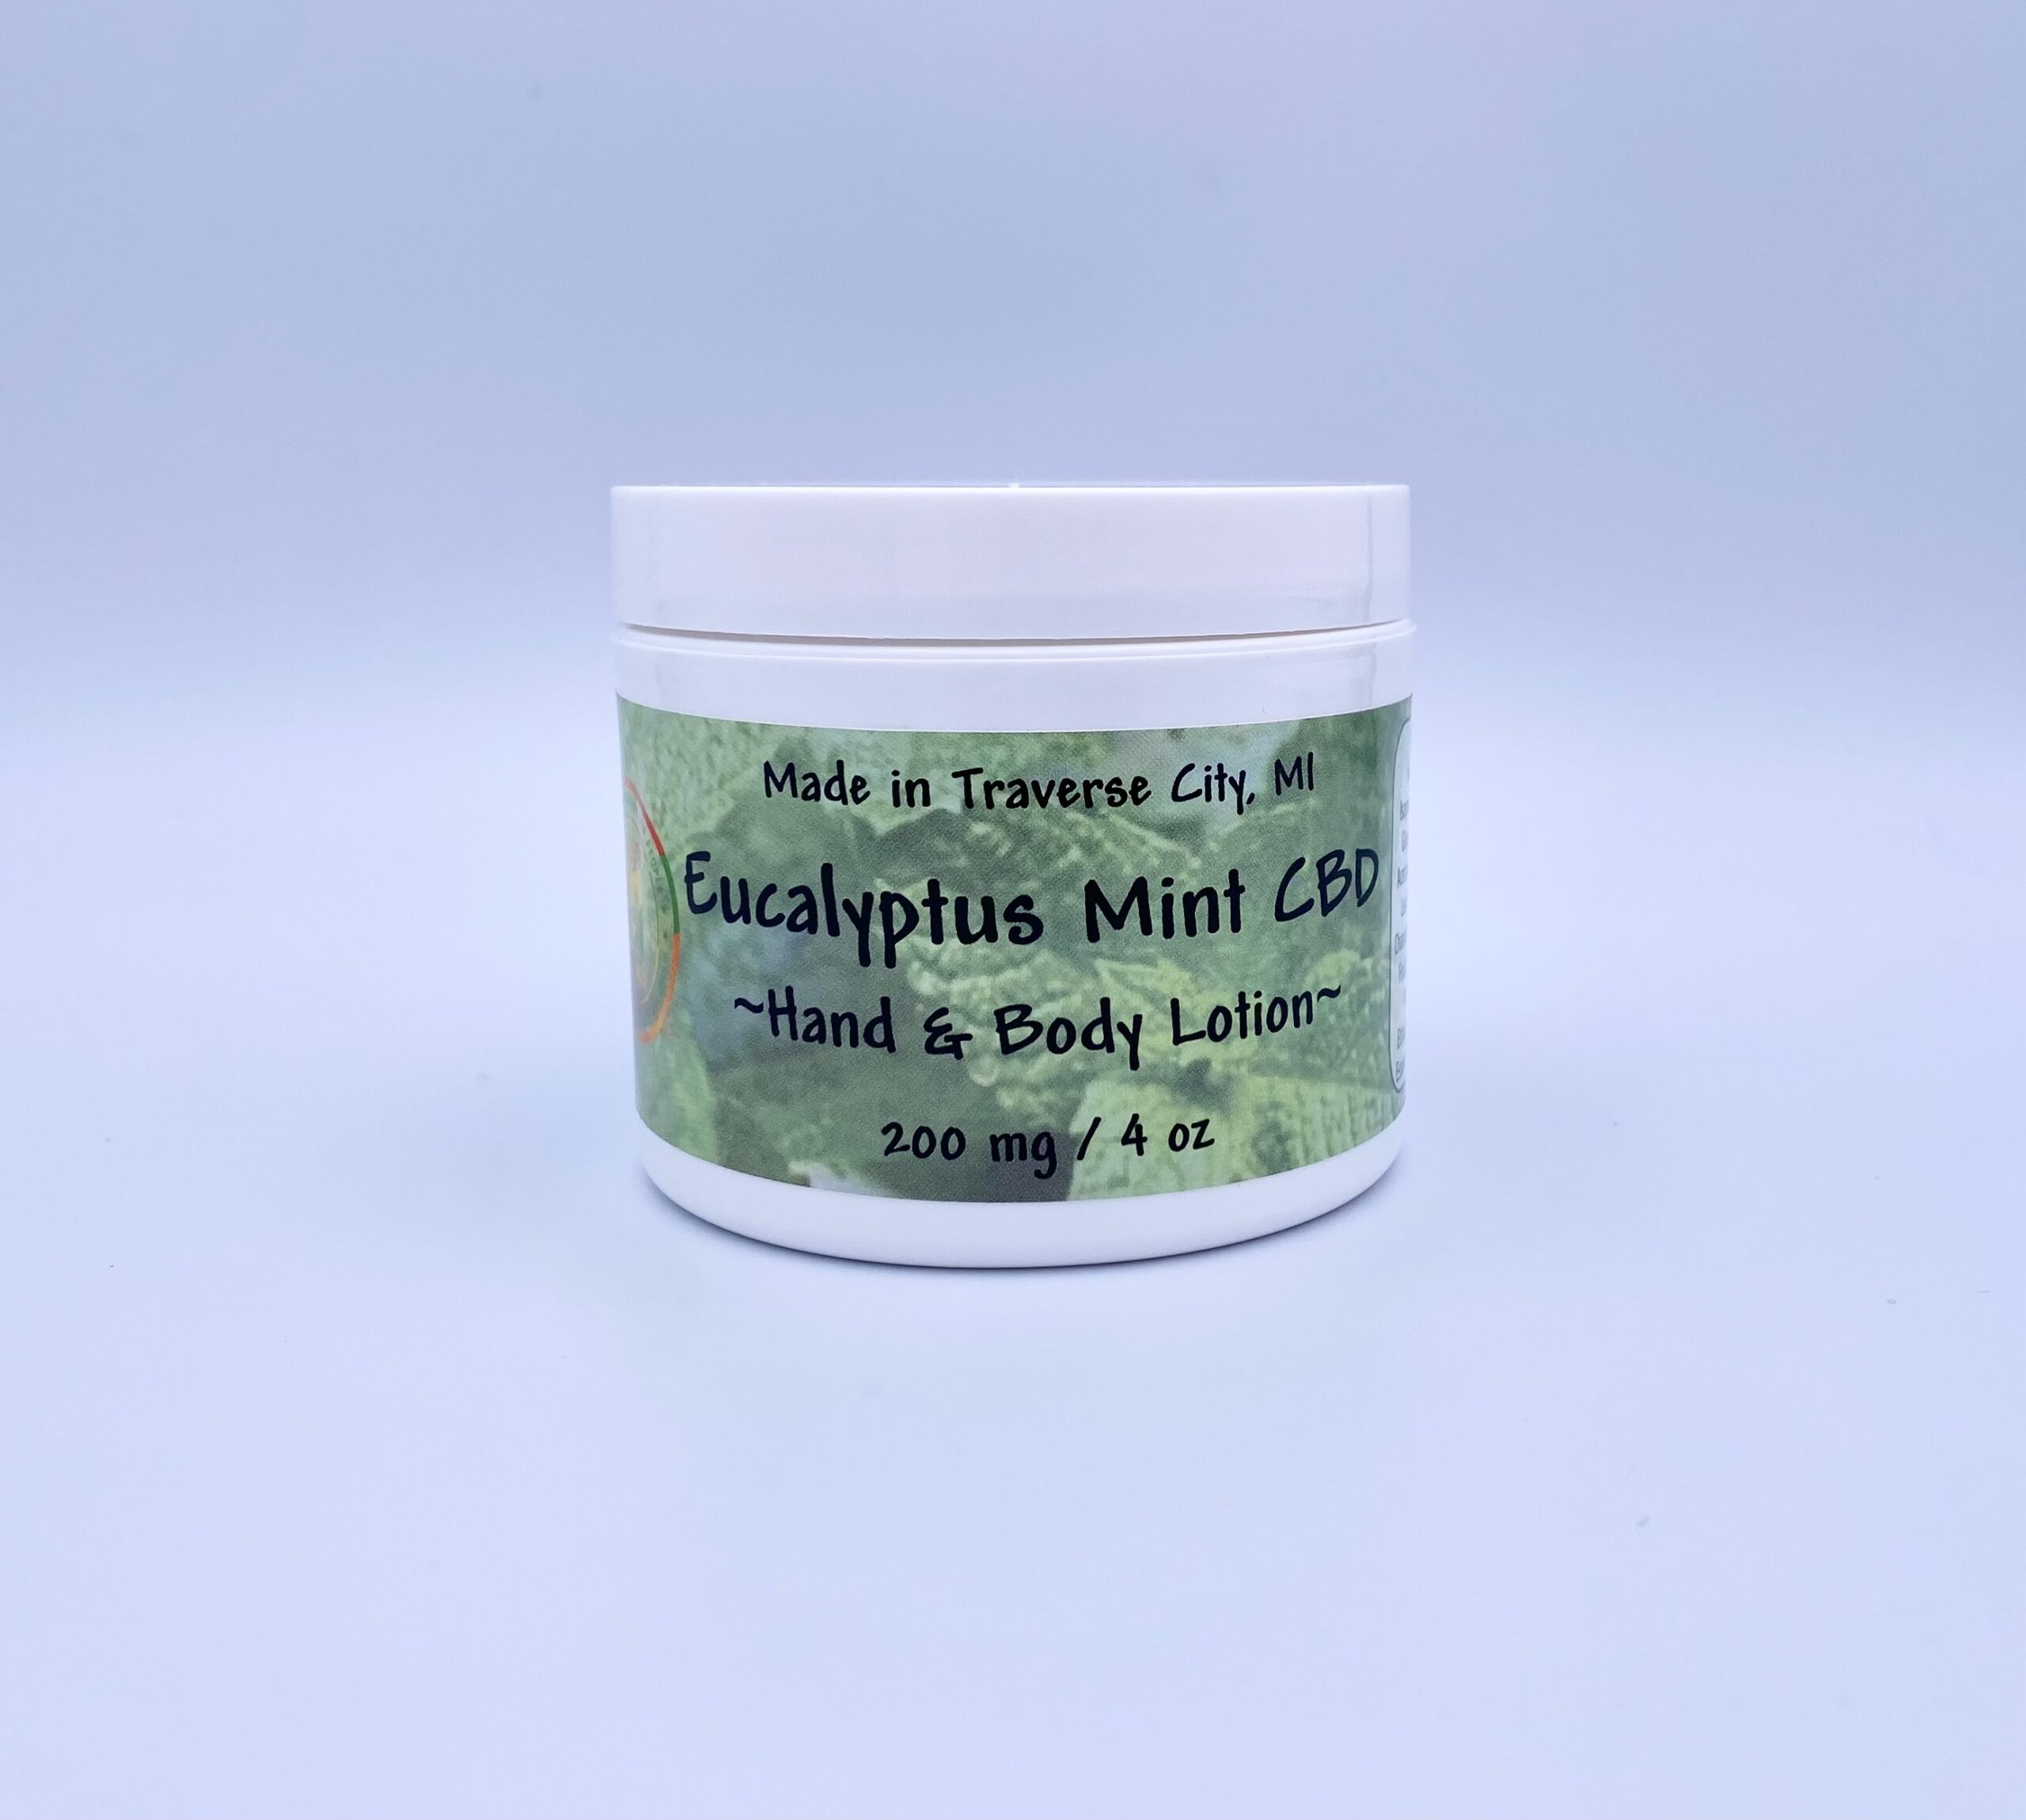 CBD Eucalyptus Mint Lotion 200mg / 4 oz - Buy Online $35.00